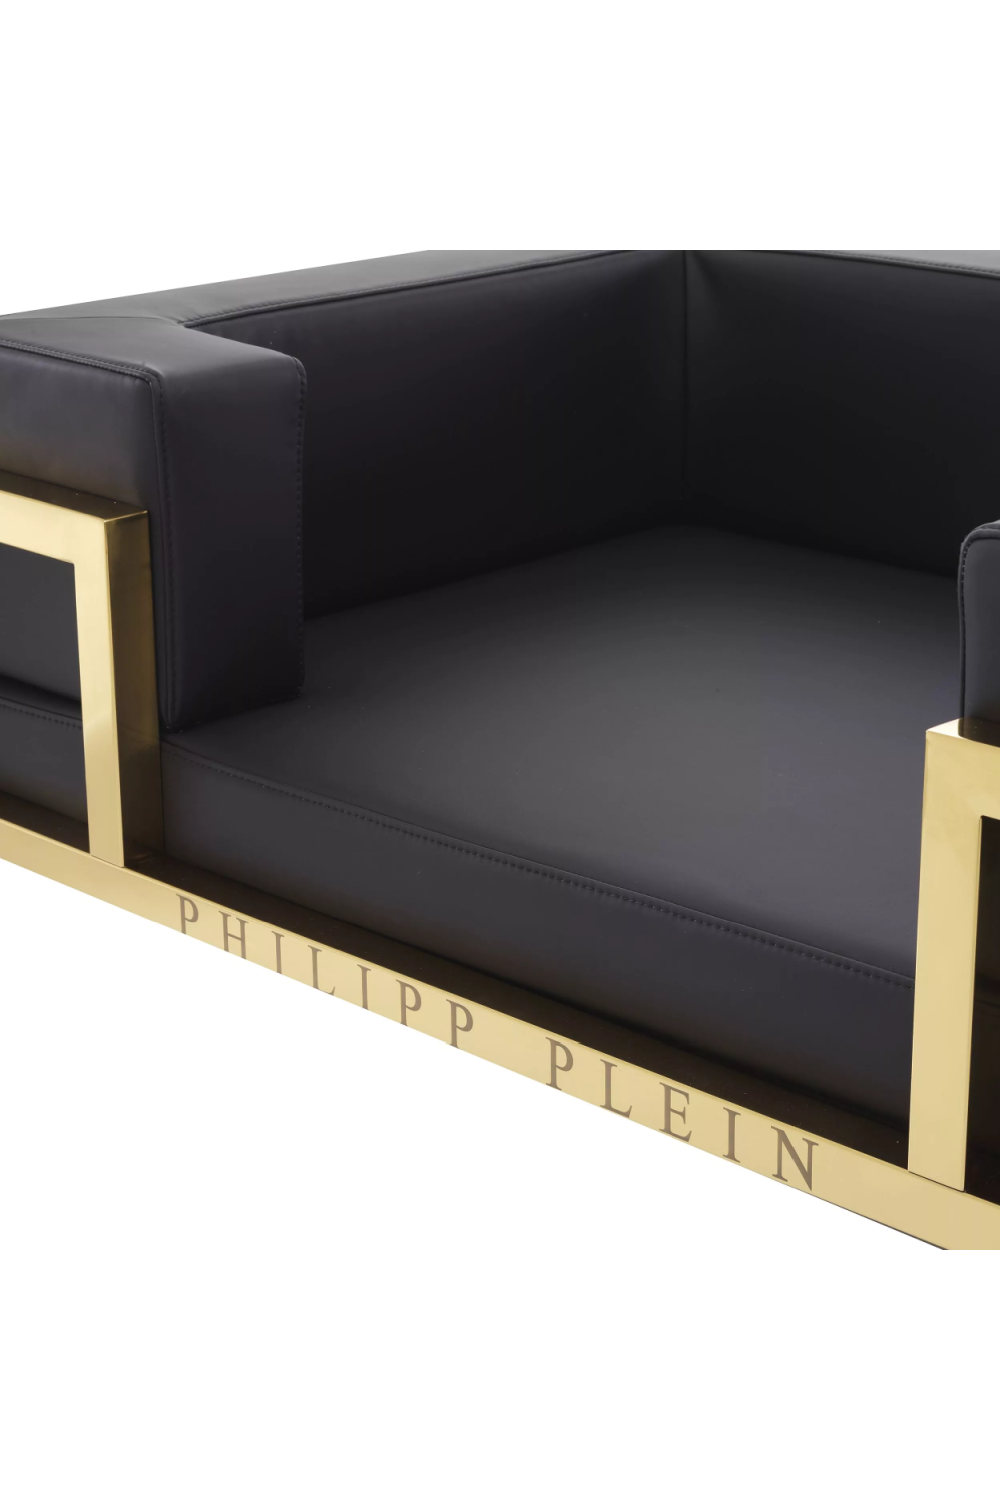 Gold Framed Leather Dog Bed XL | Philipp Plein High Conic | Oroa.com